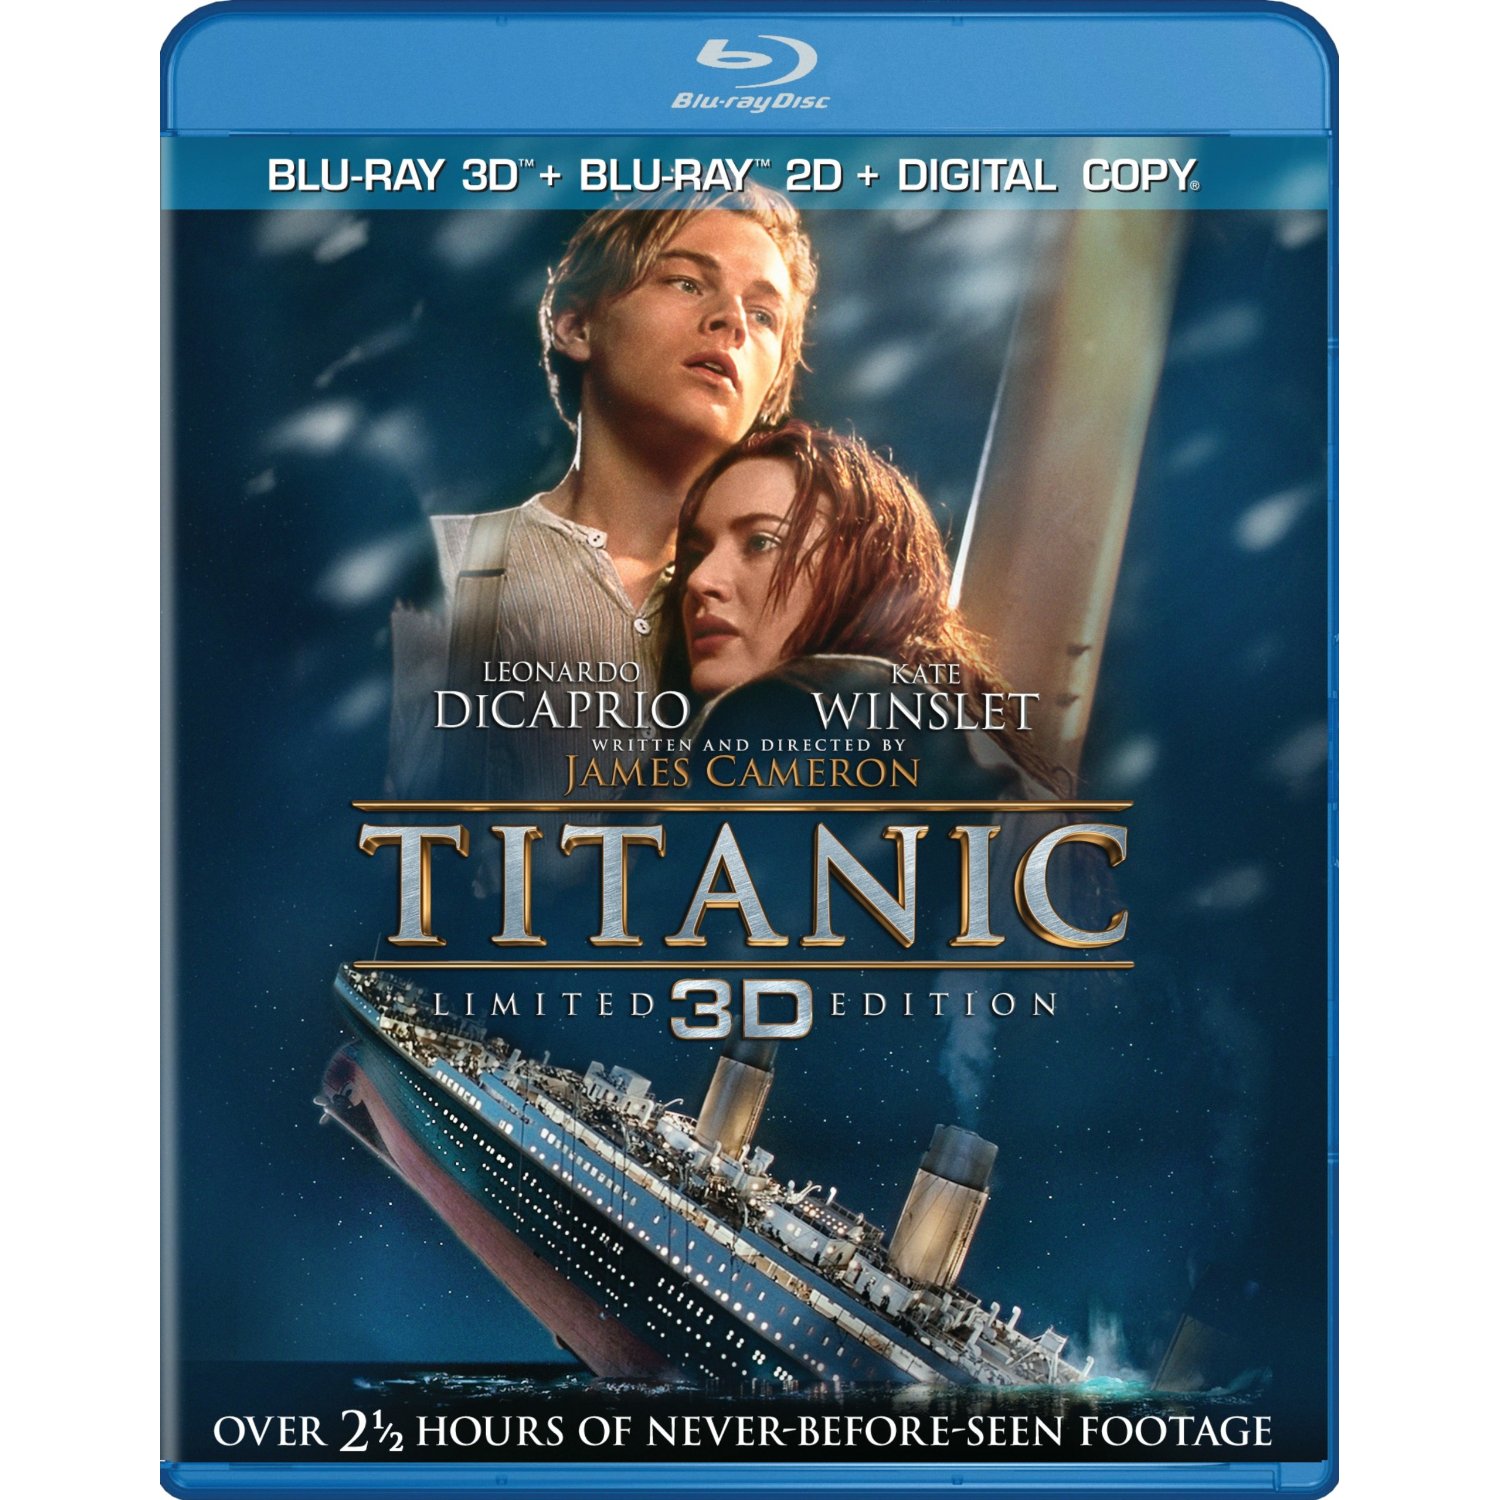 Titanic Full Movie In Hindi Hd 1080p 1997 52